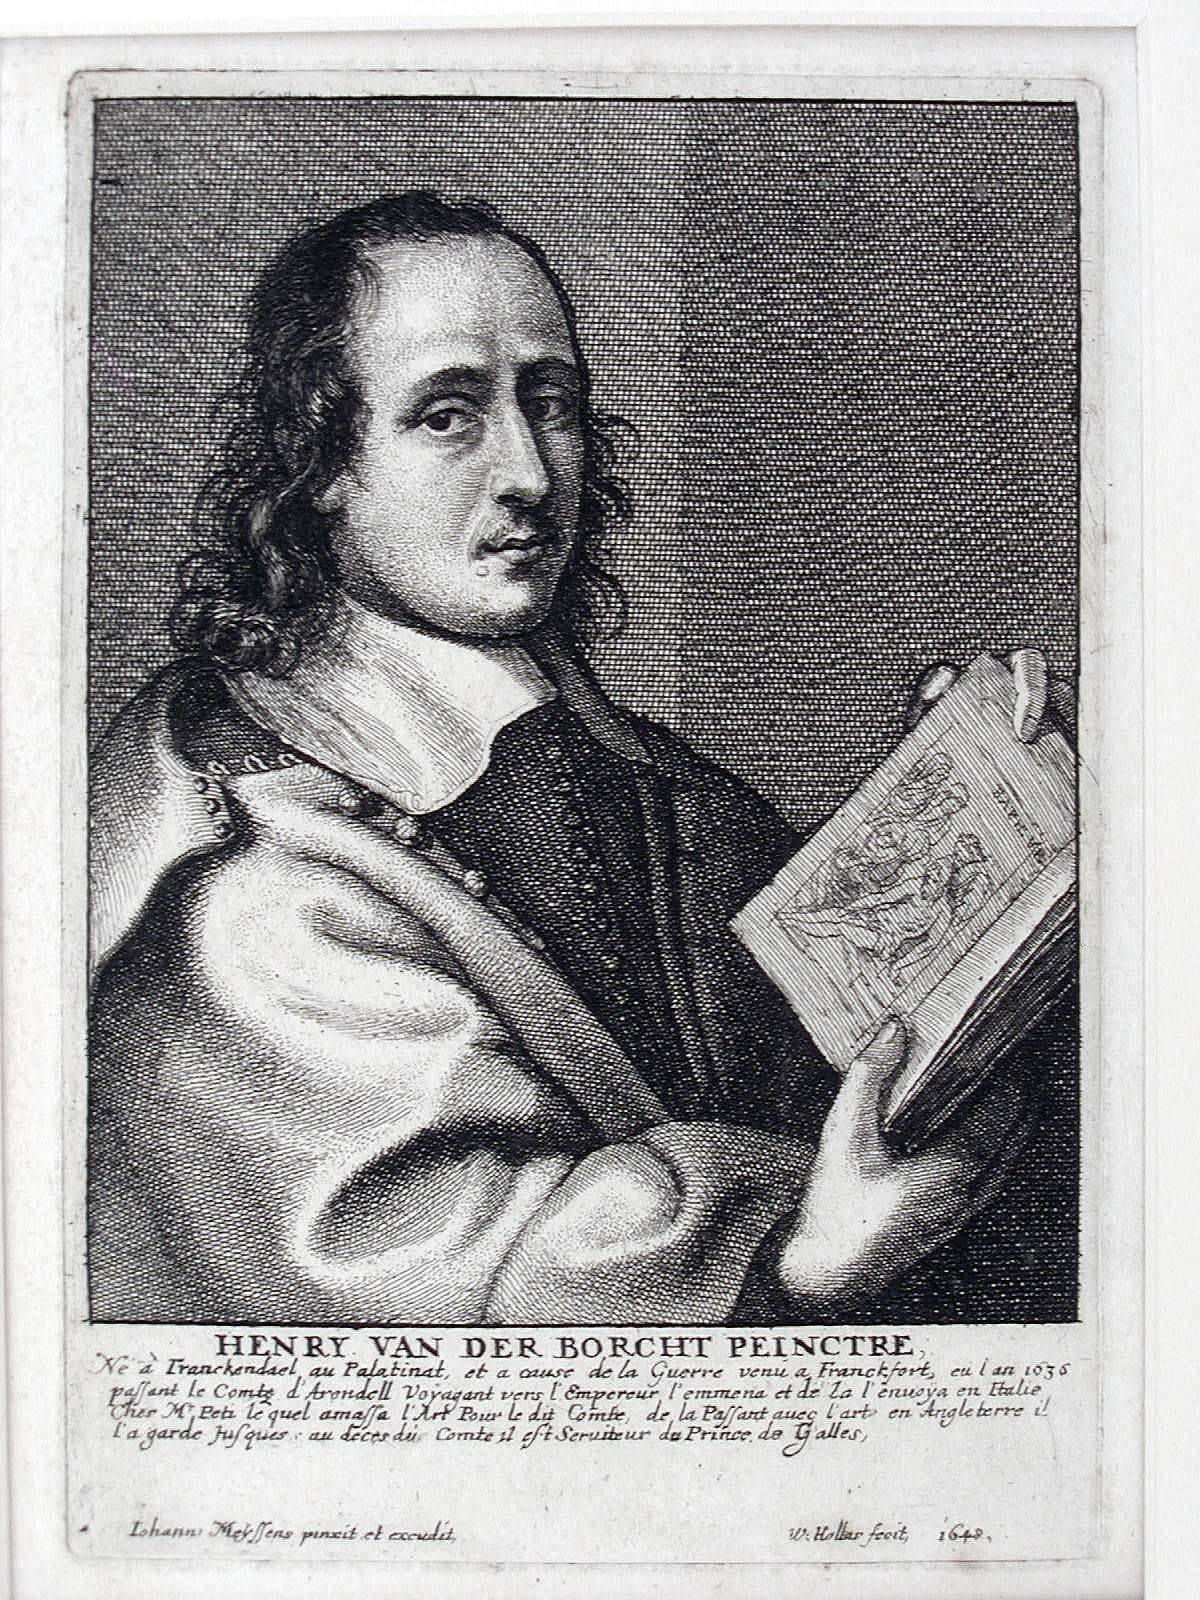 Wenceslaus Hollar Portrait Print -  Henry van der Borcht, Painter